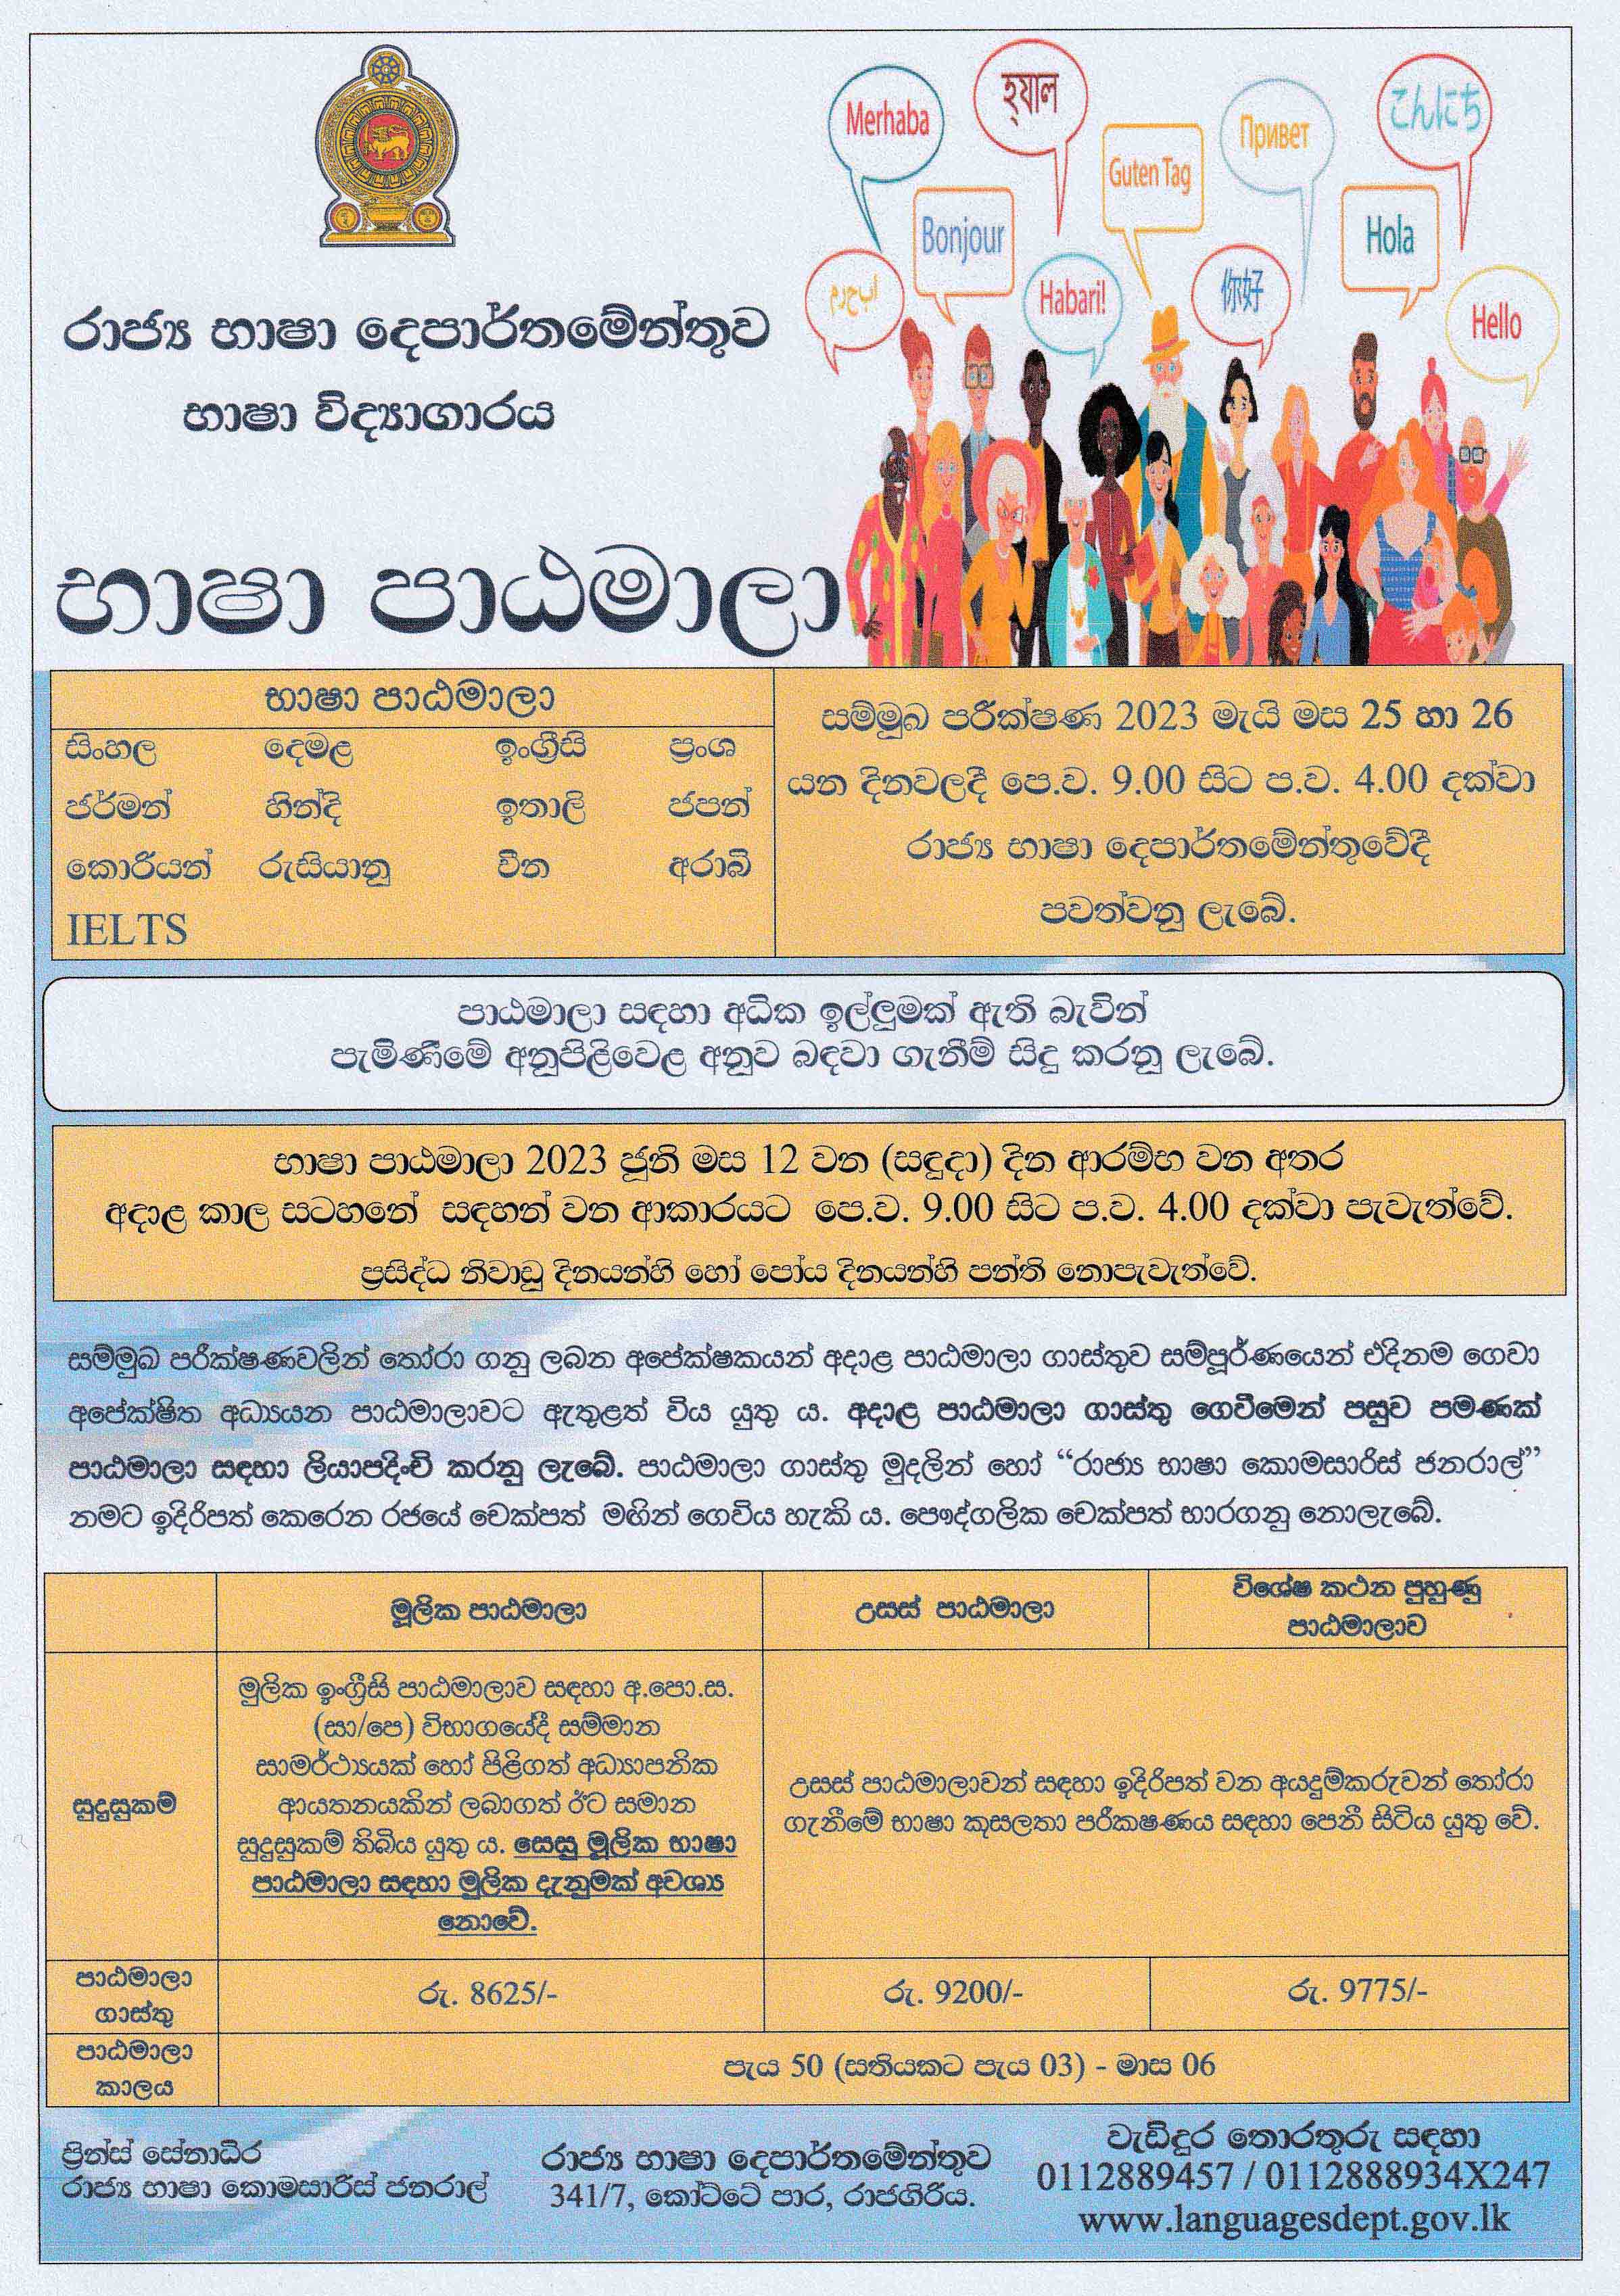 Advertistment Sinhala 02nd Semester 2023